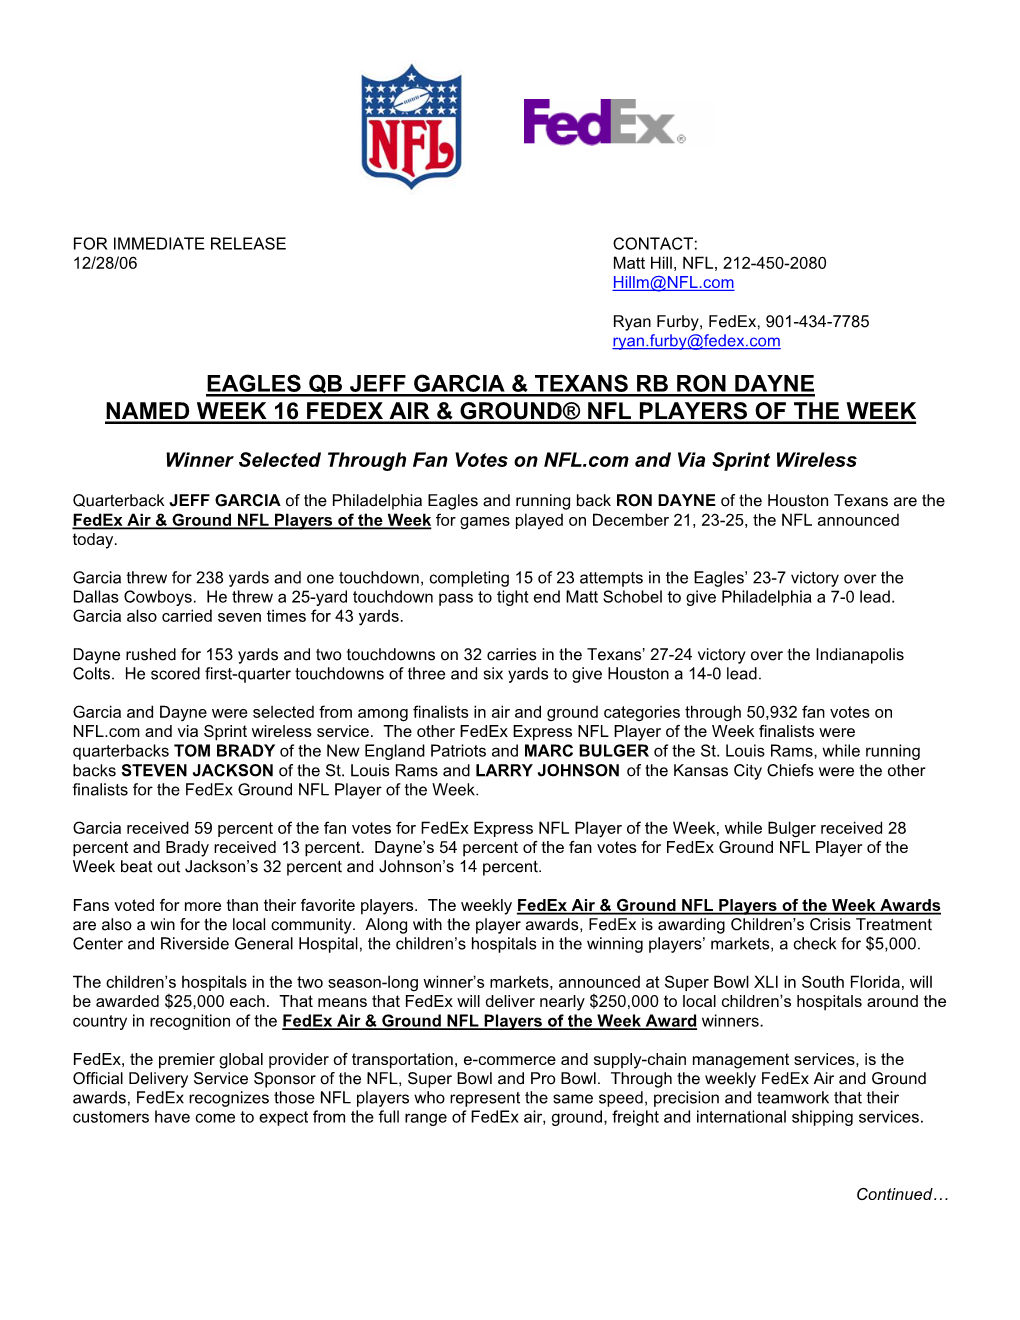 Eagles Qb Jeff Garcia & Texans Rb Ron Dayne Named Week 16 Fedex Air & Ground® Nfl Players of the Week